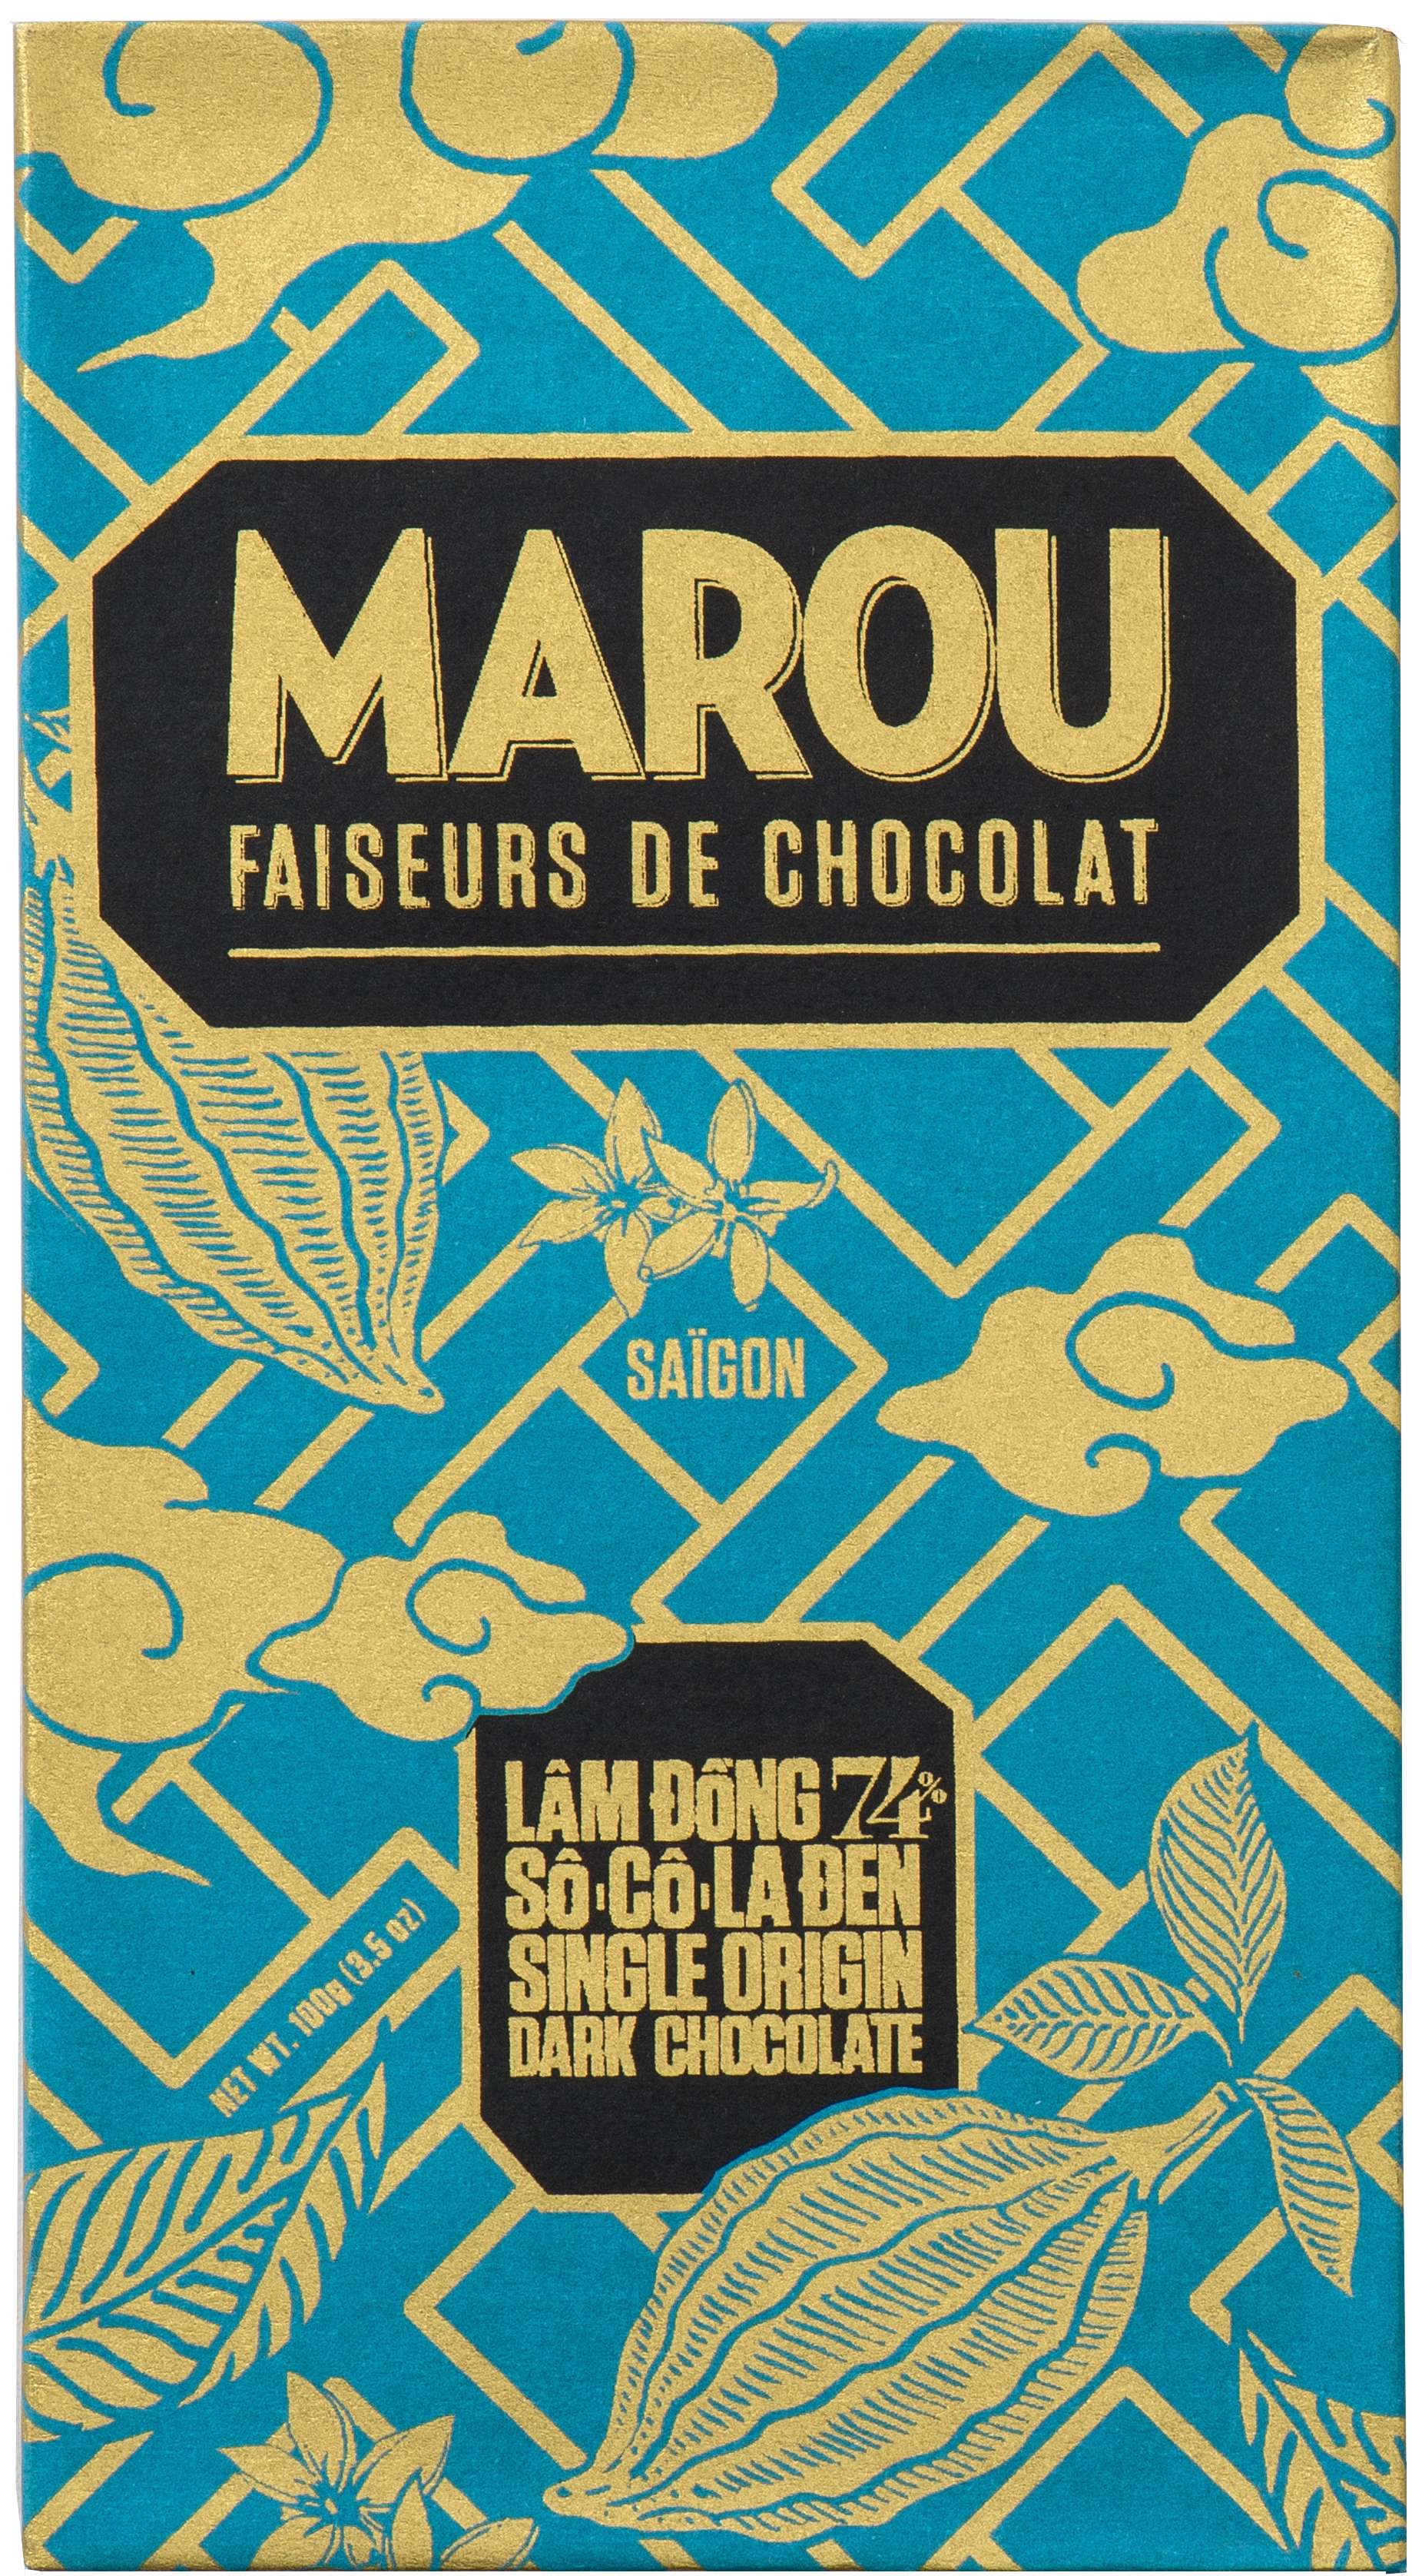 MAROU | Dunkle Schokolade »Lam Dong« 74% | 80g